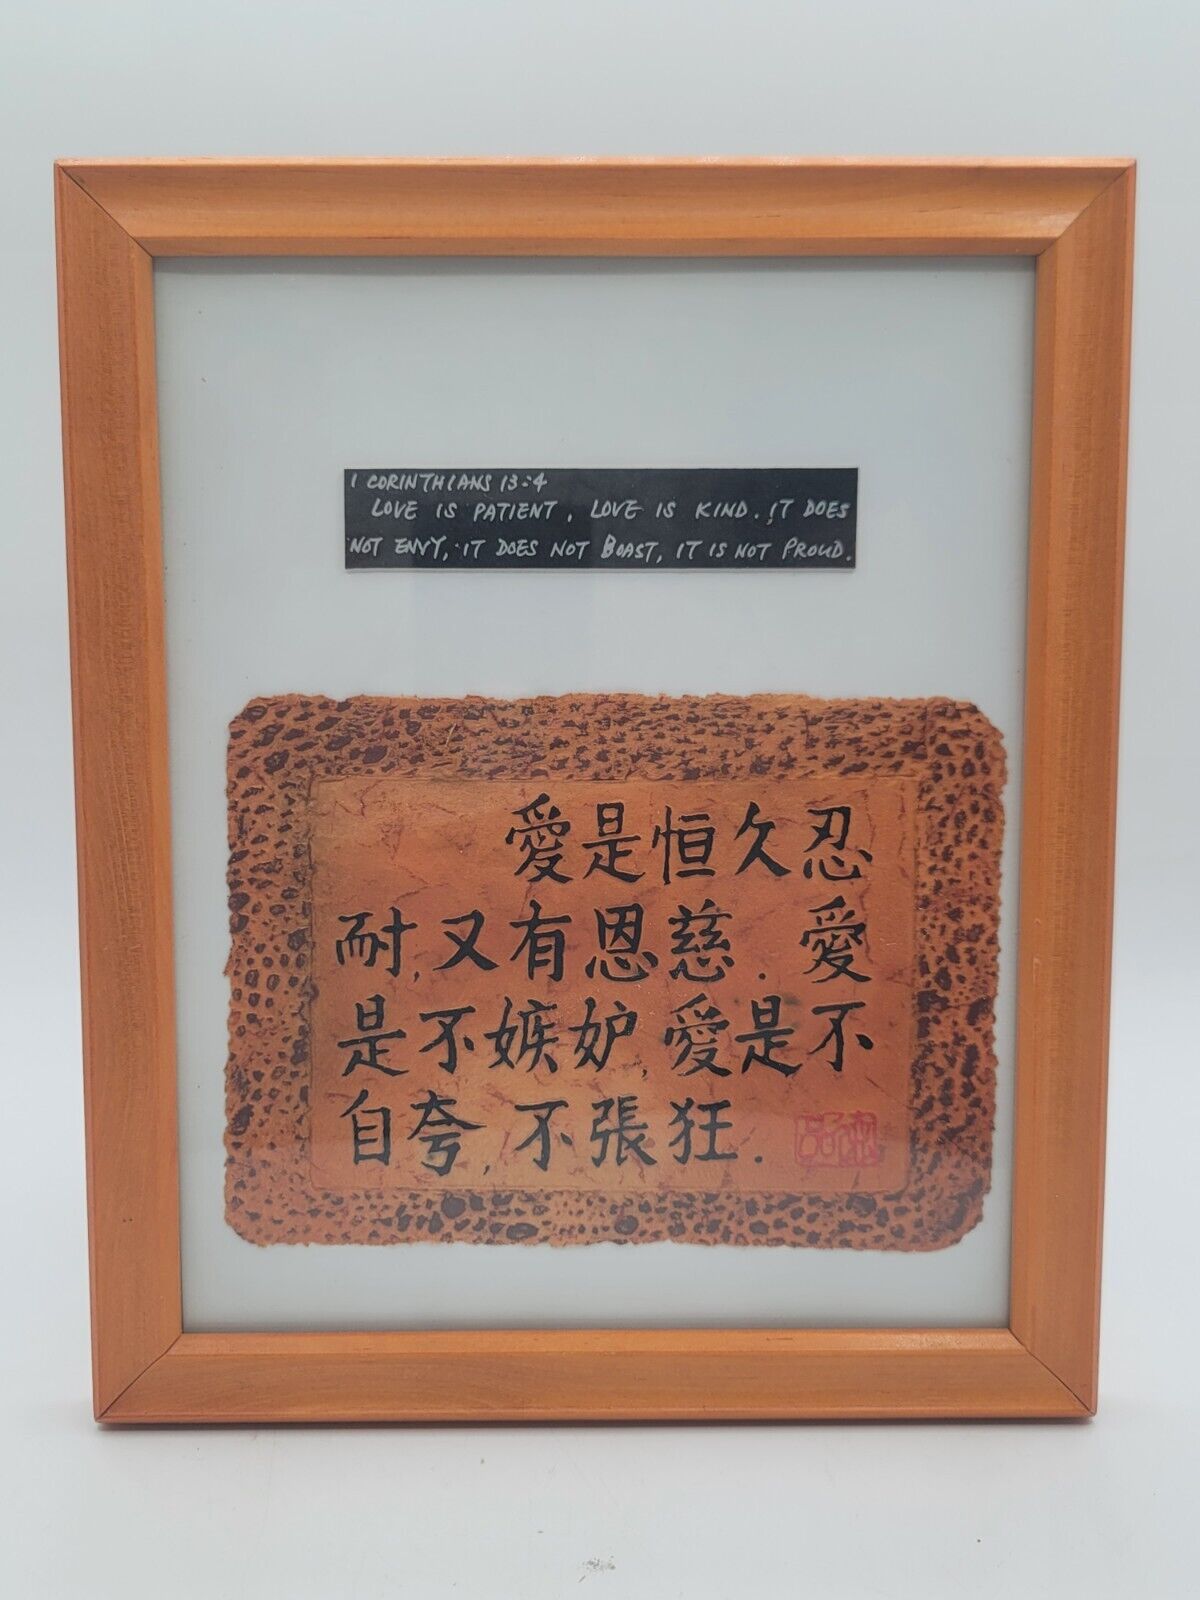 Chinese Calligraphy Framed Art Love Bible Verses 1 CORINTHIANS 13